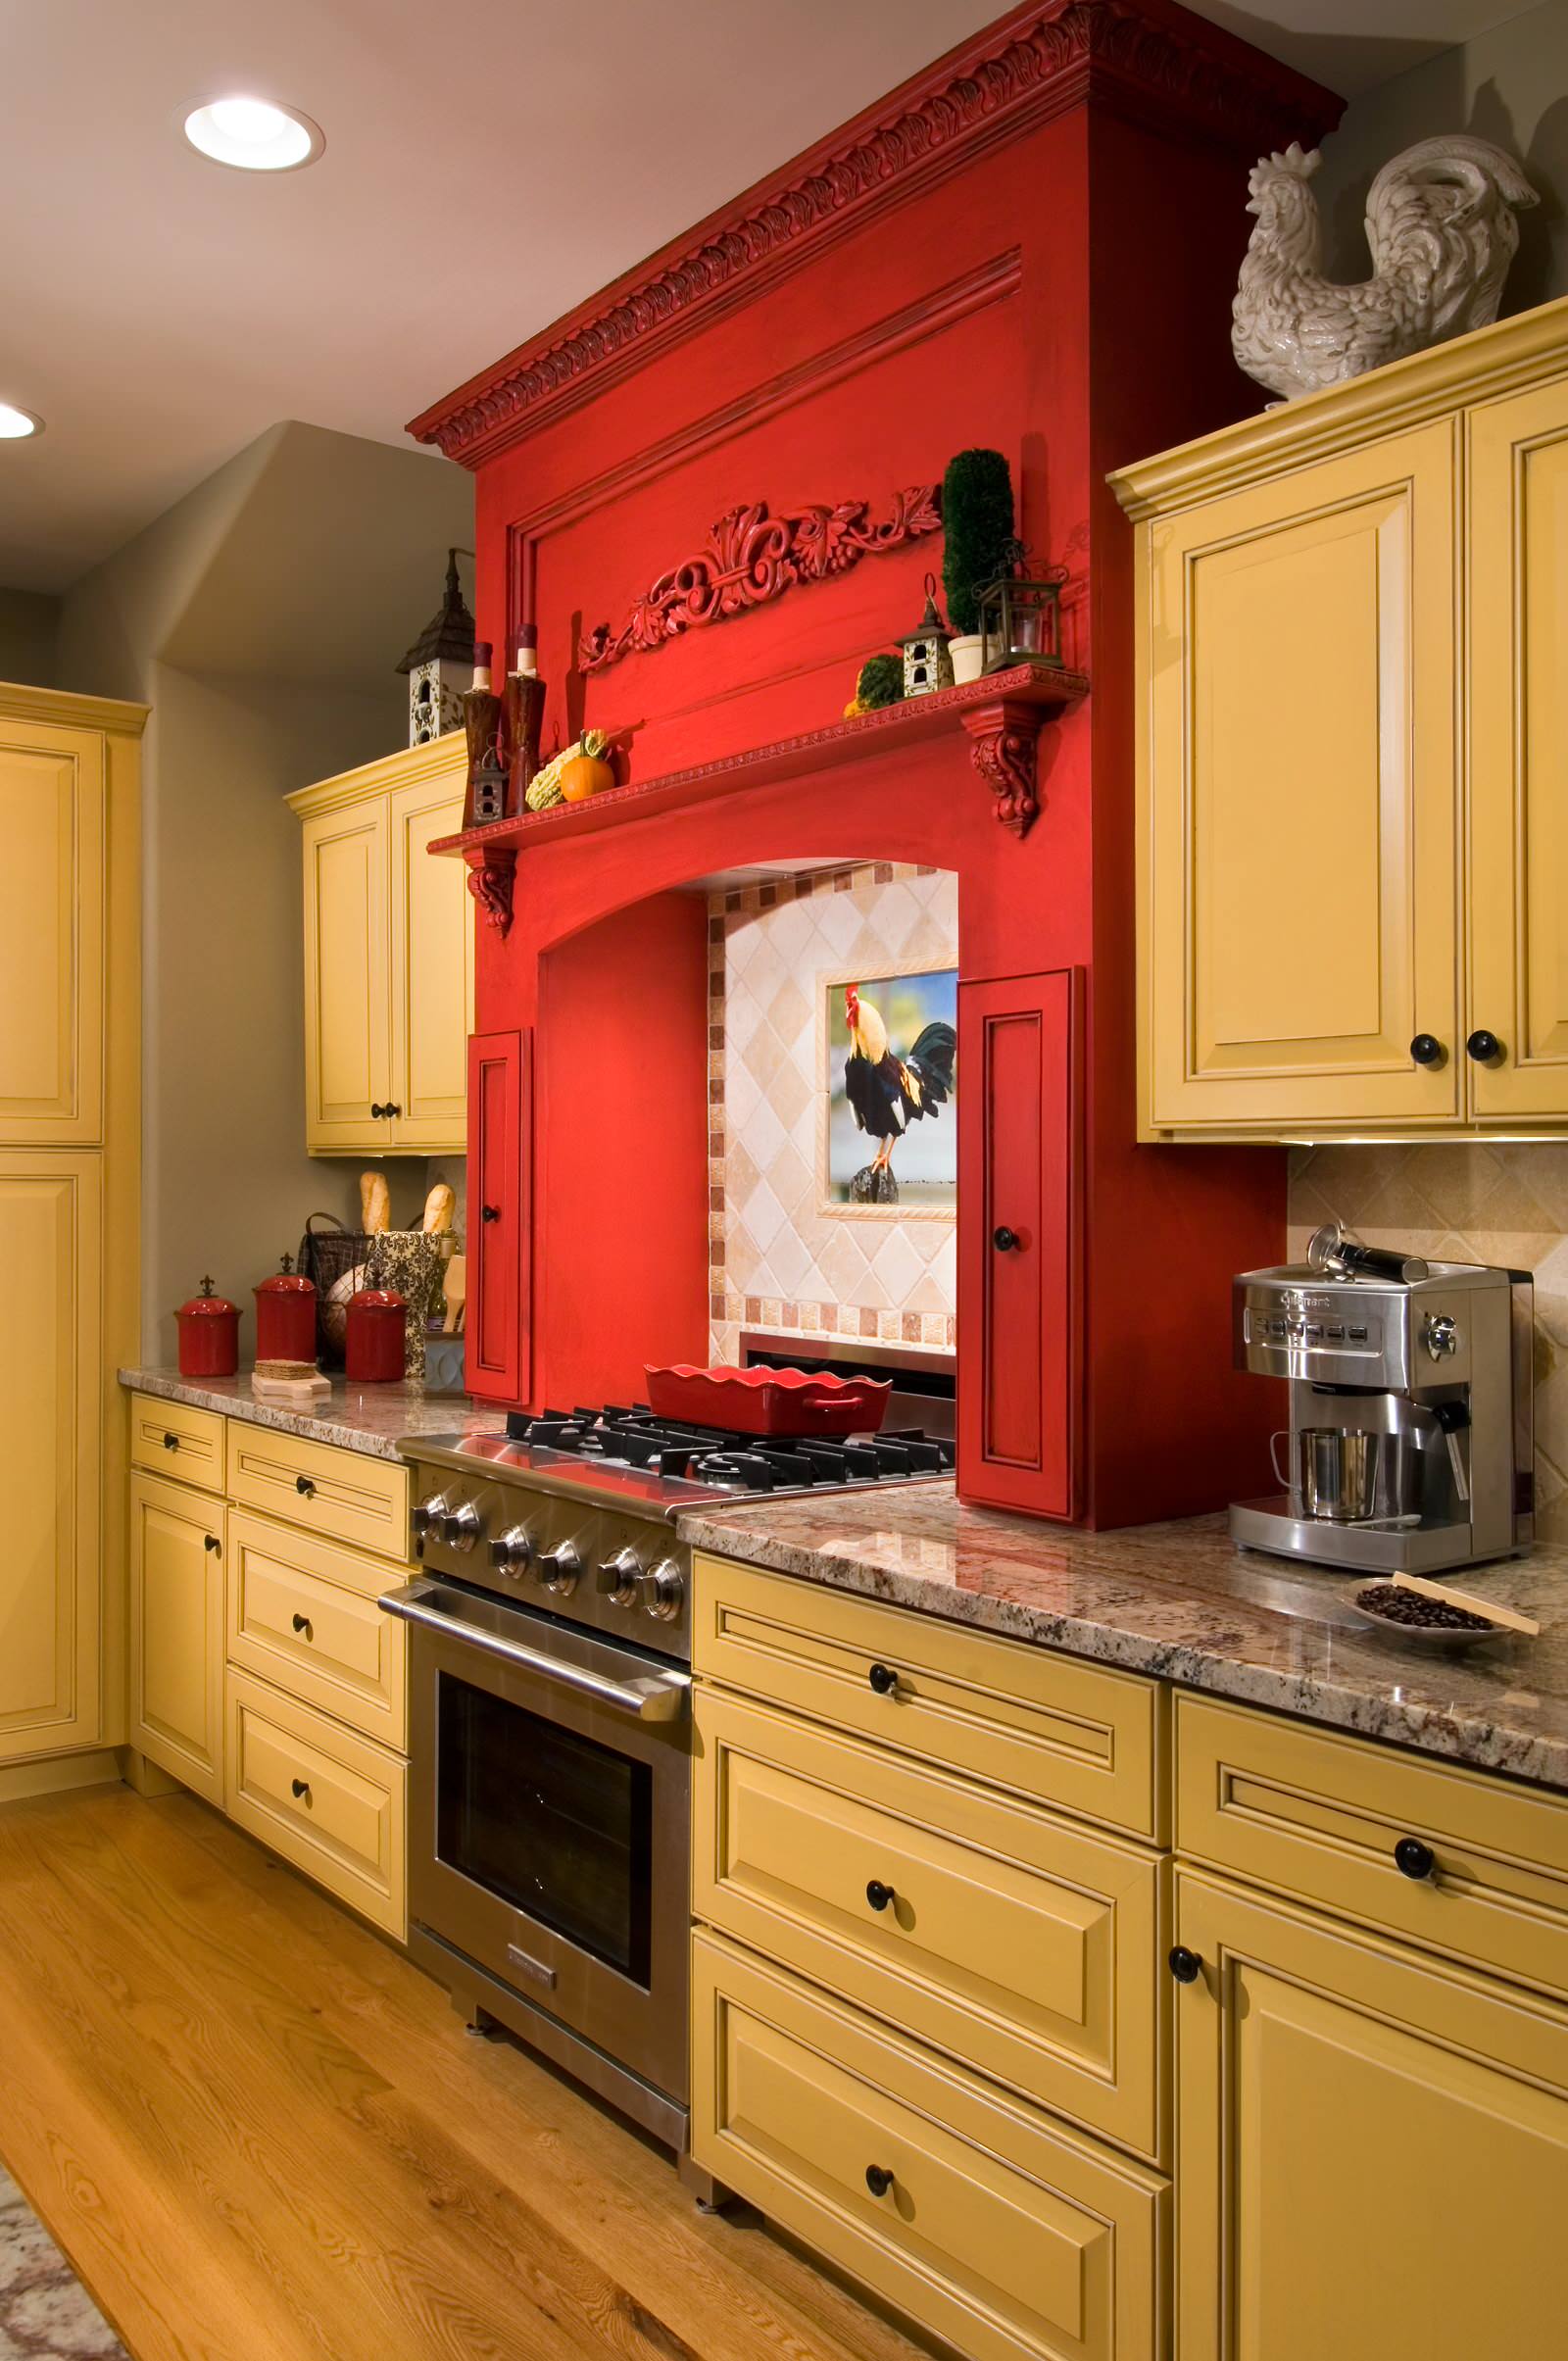 Красные стены на кухне